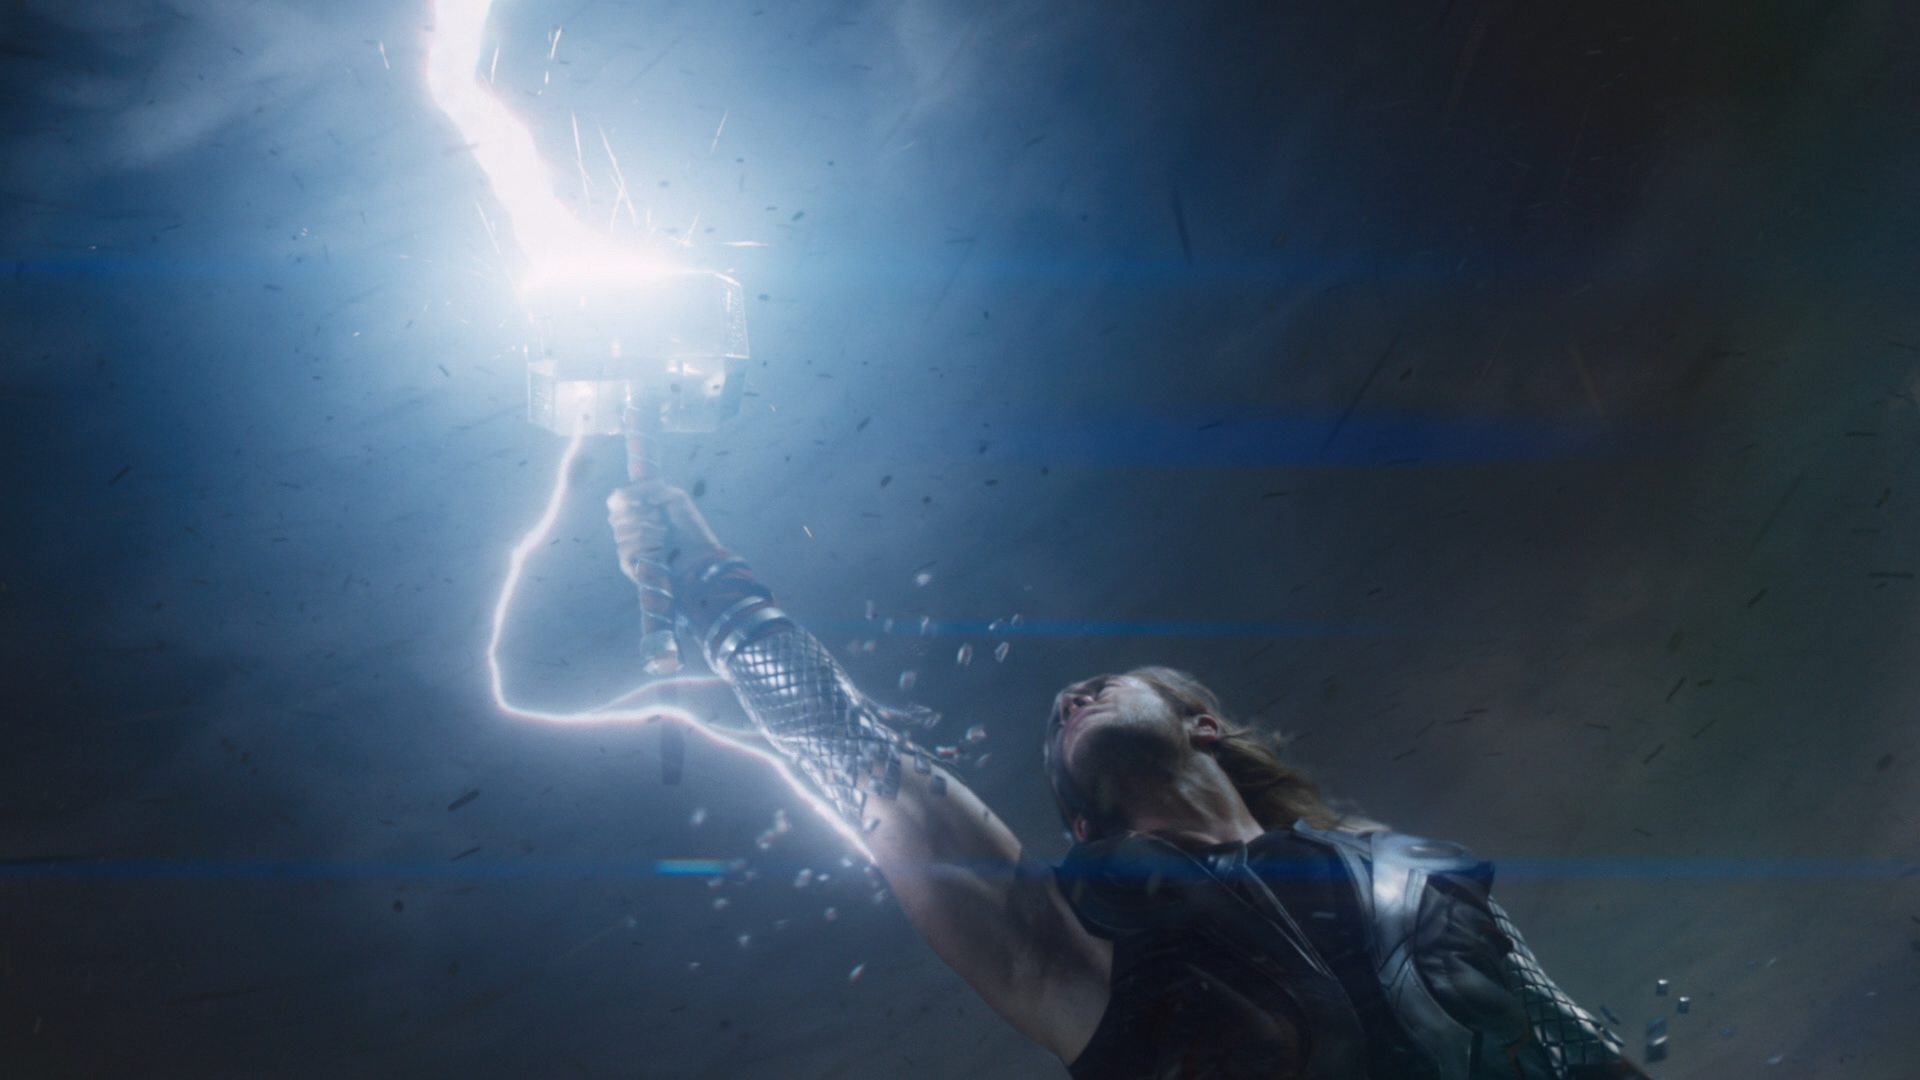 thor-screenshots-lightning-marvel-chris-hemsworth-the-avengers-movie-mjolnir-HD-Wallpapers.png